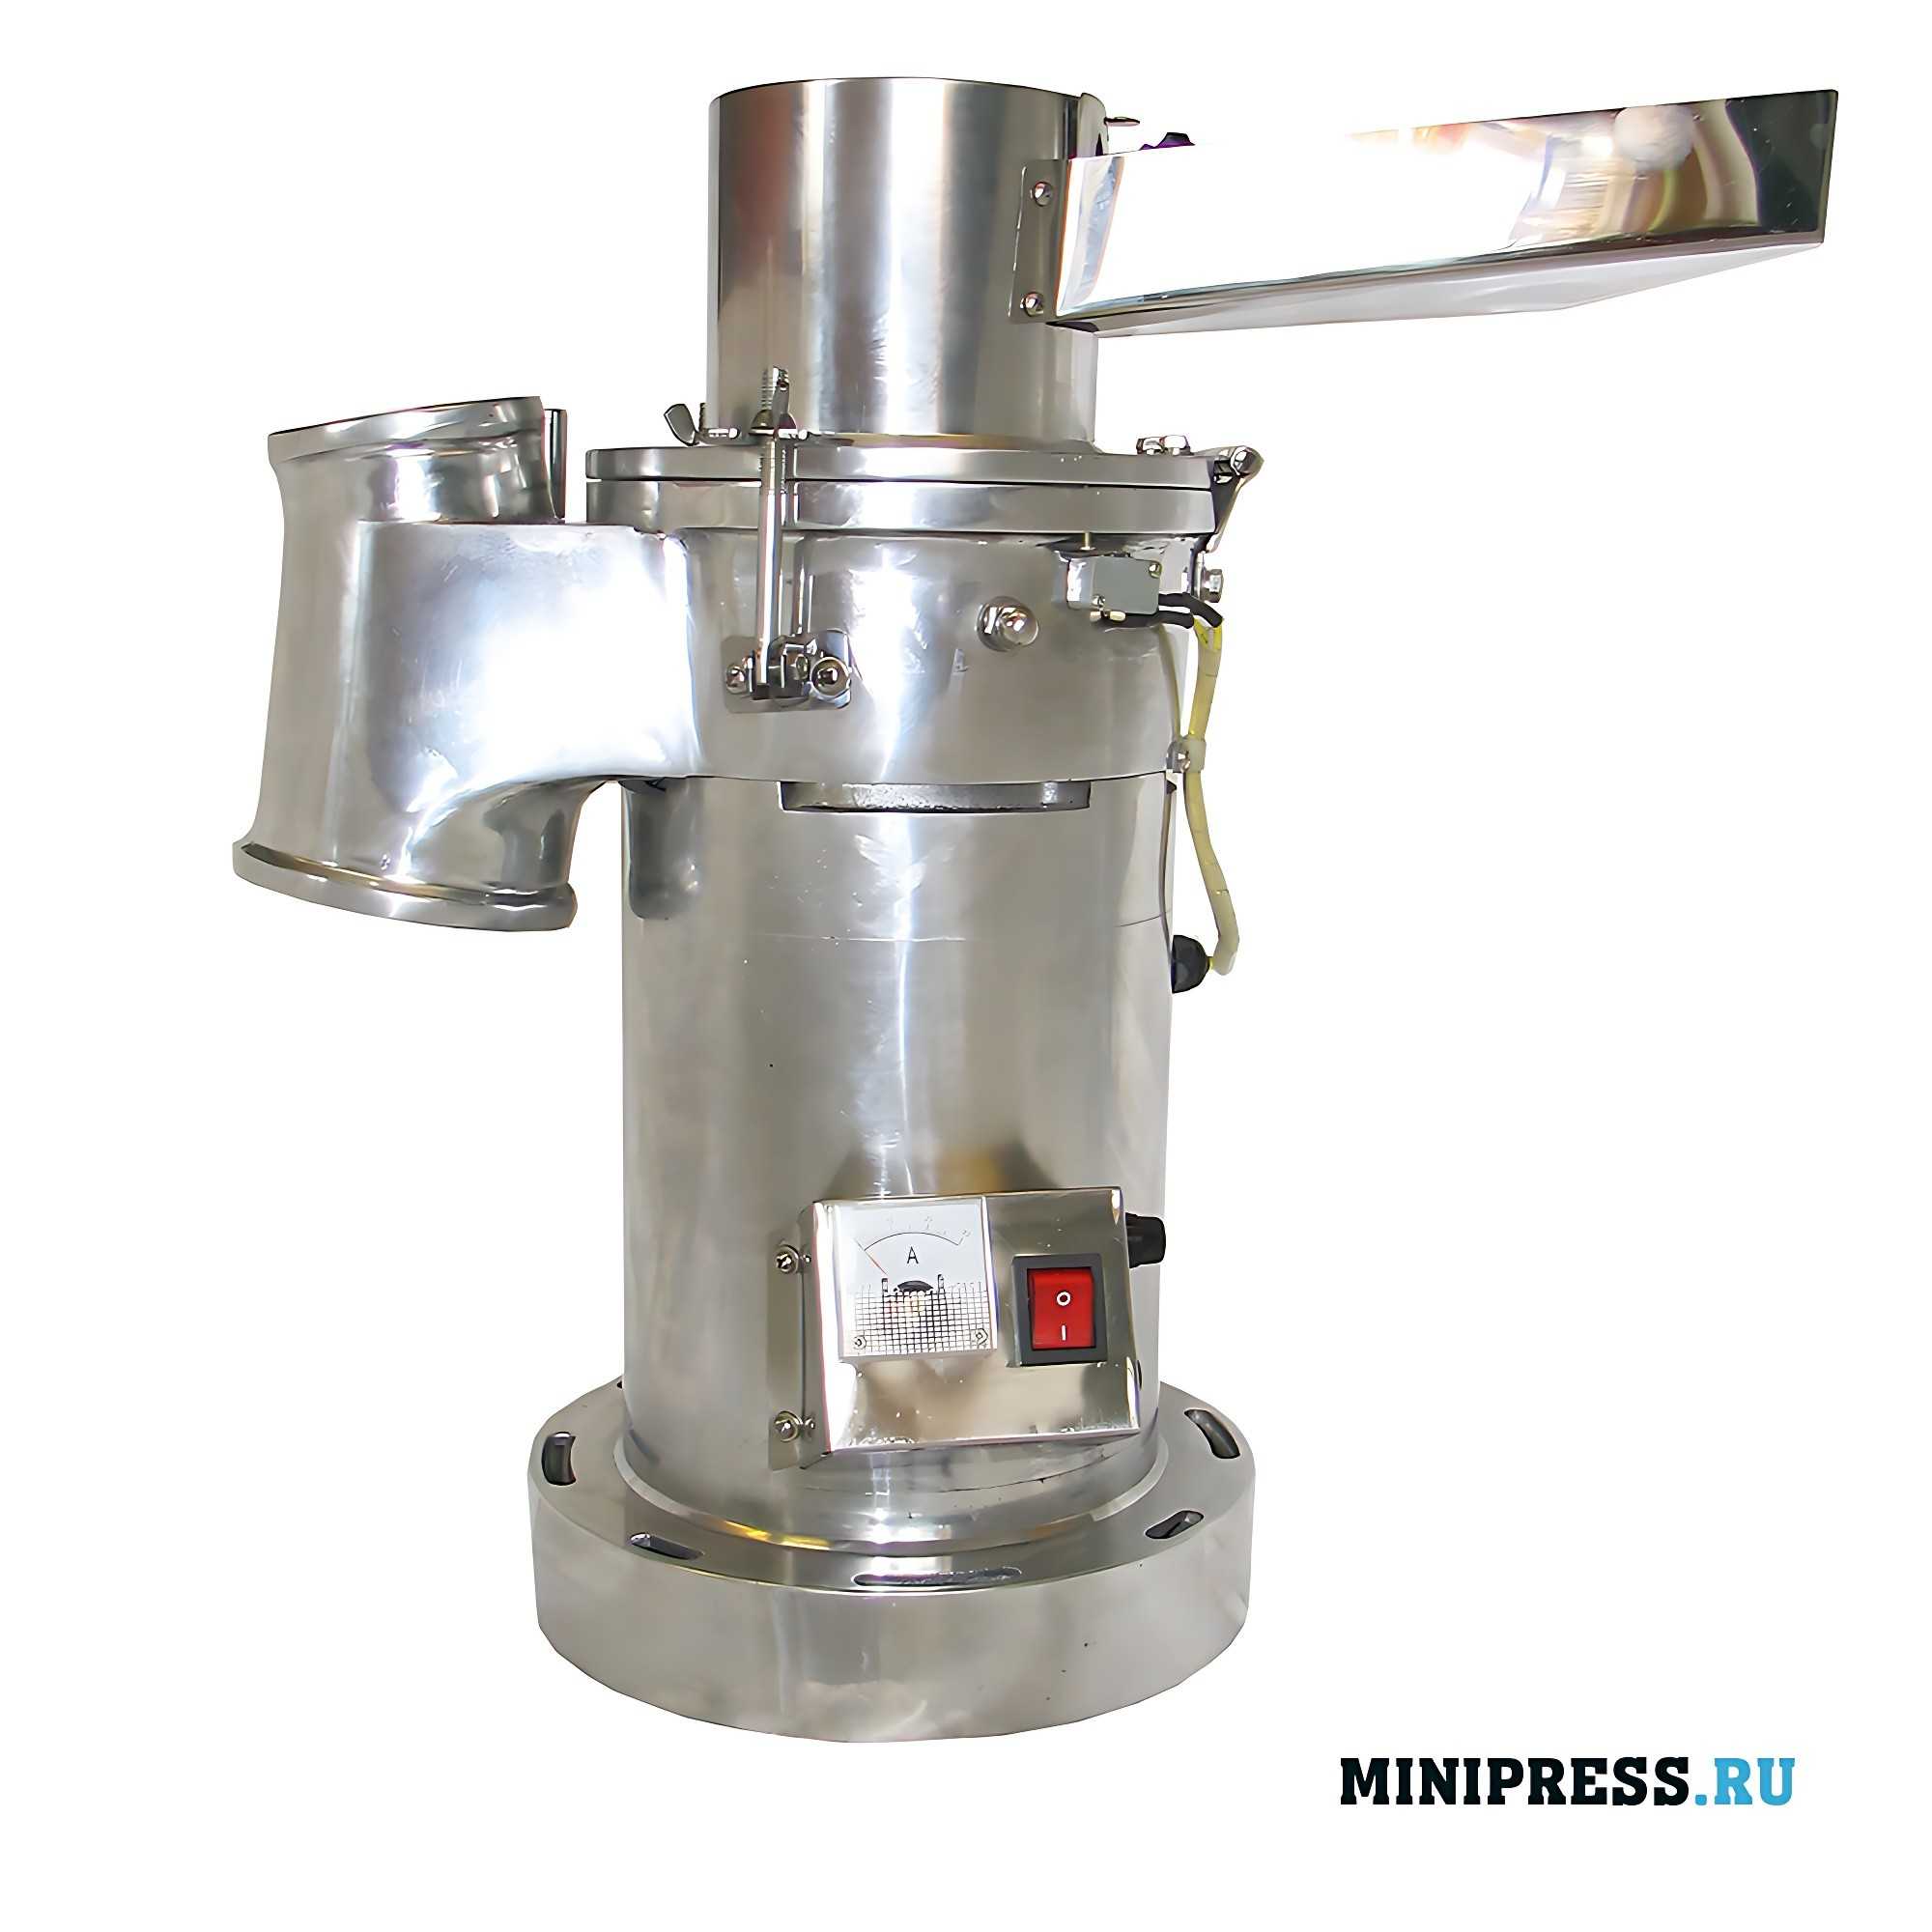 Universal tabletop hammer mill PROFI-01